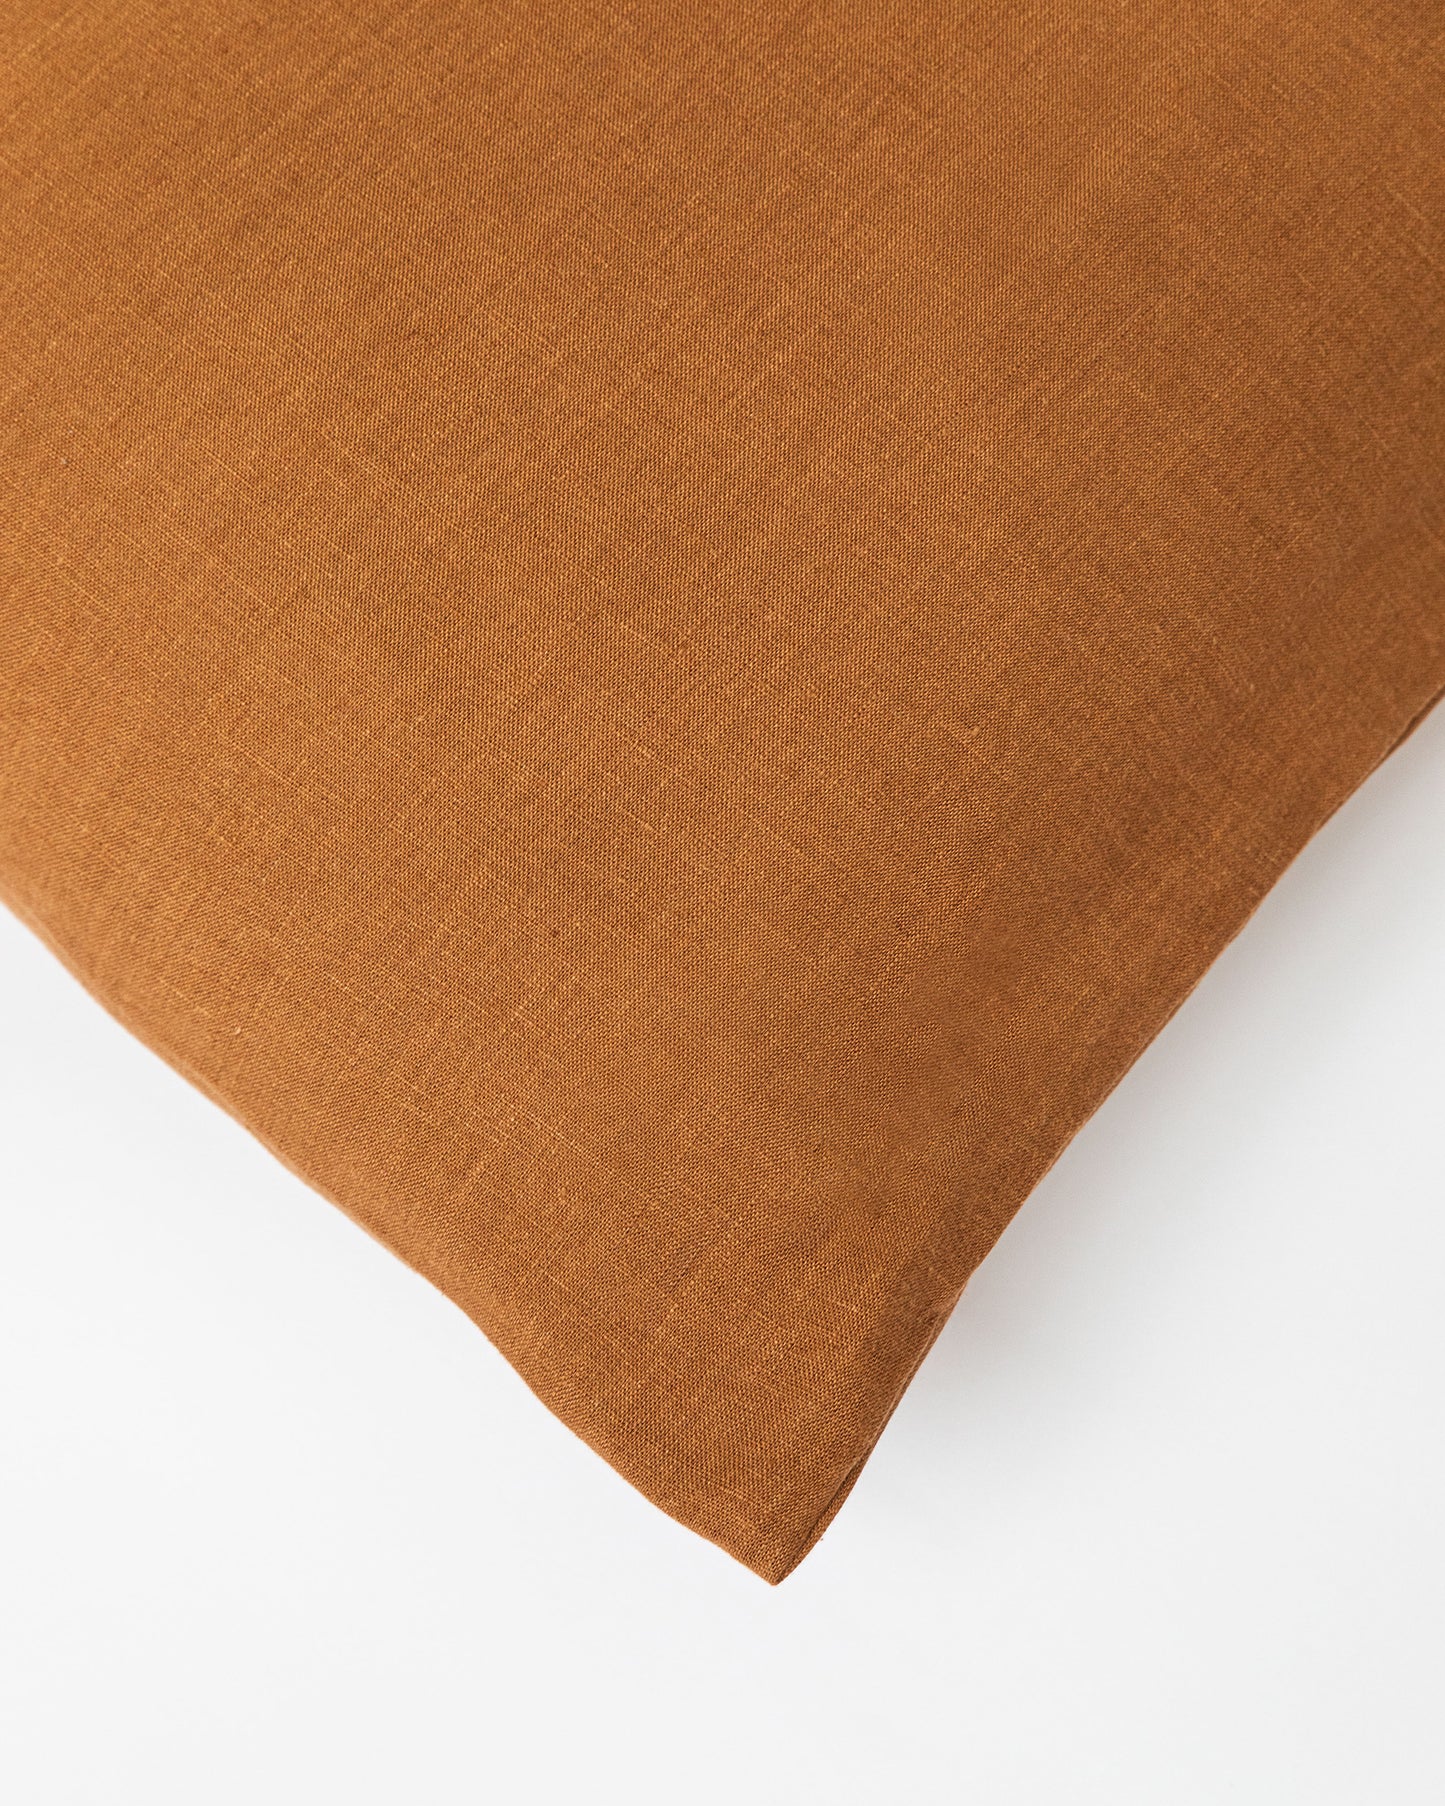 Body pillowcase in Cinnamon - MagicLinen